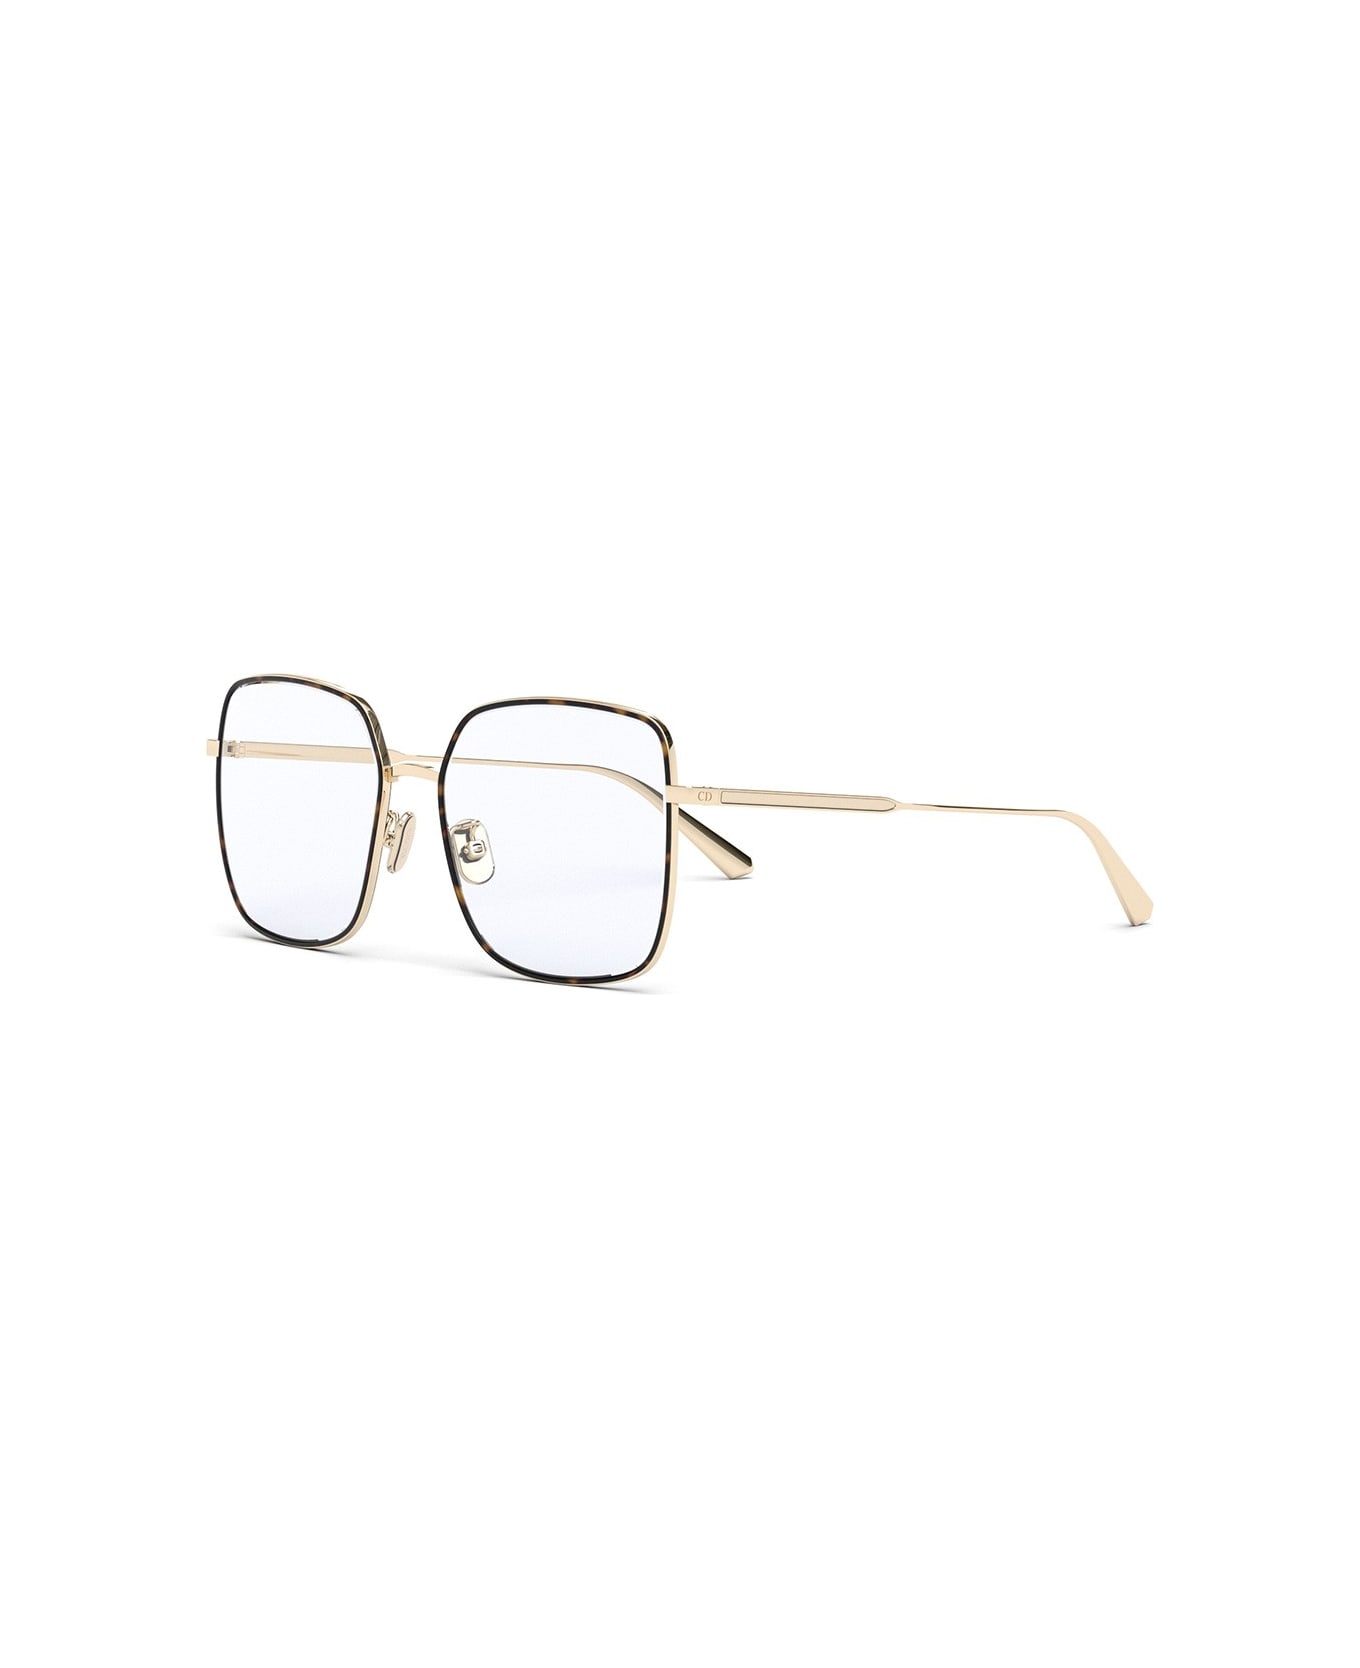 Dior Eyewear Glasses - Oro